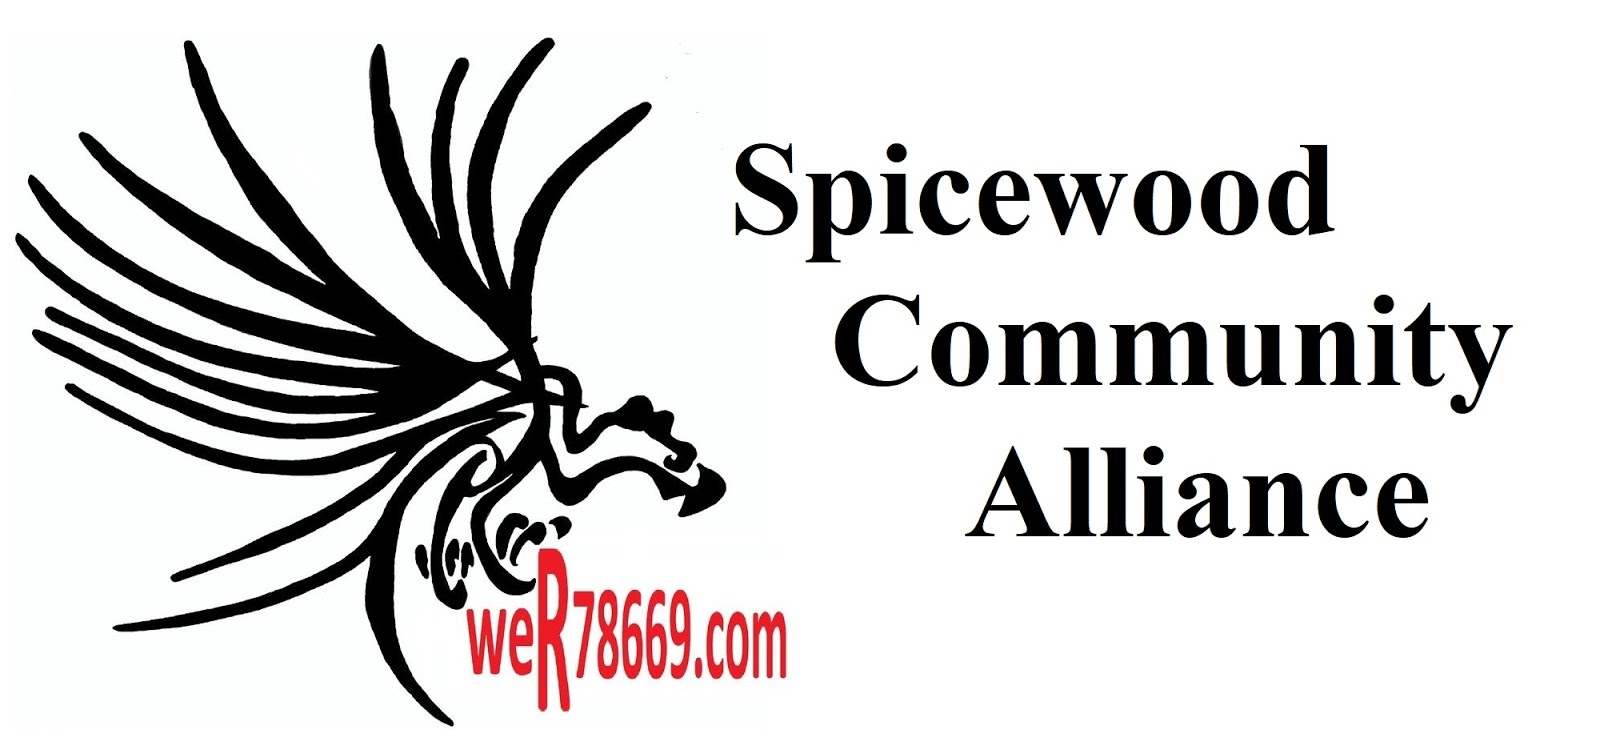 Spicewood Community Alliance